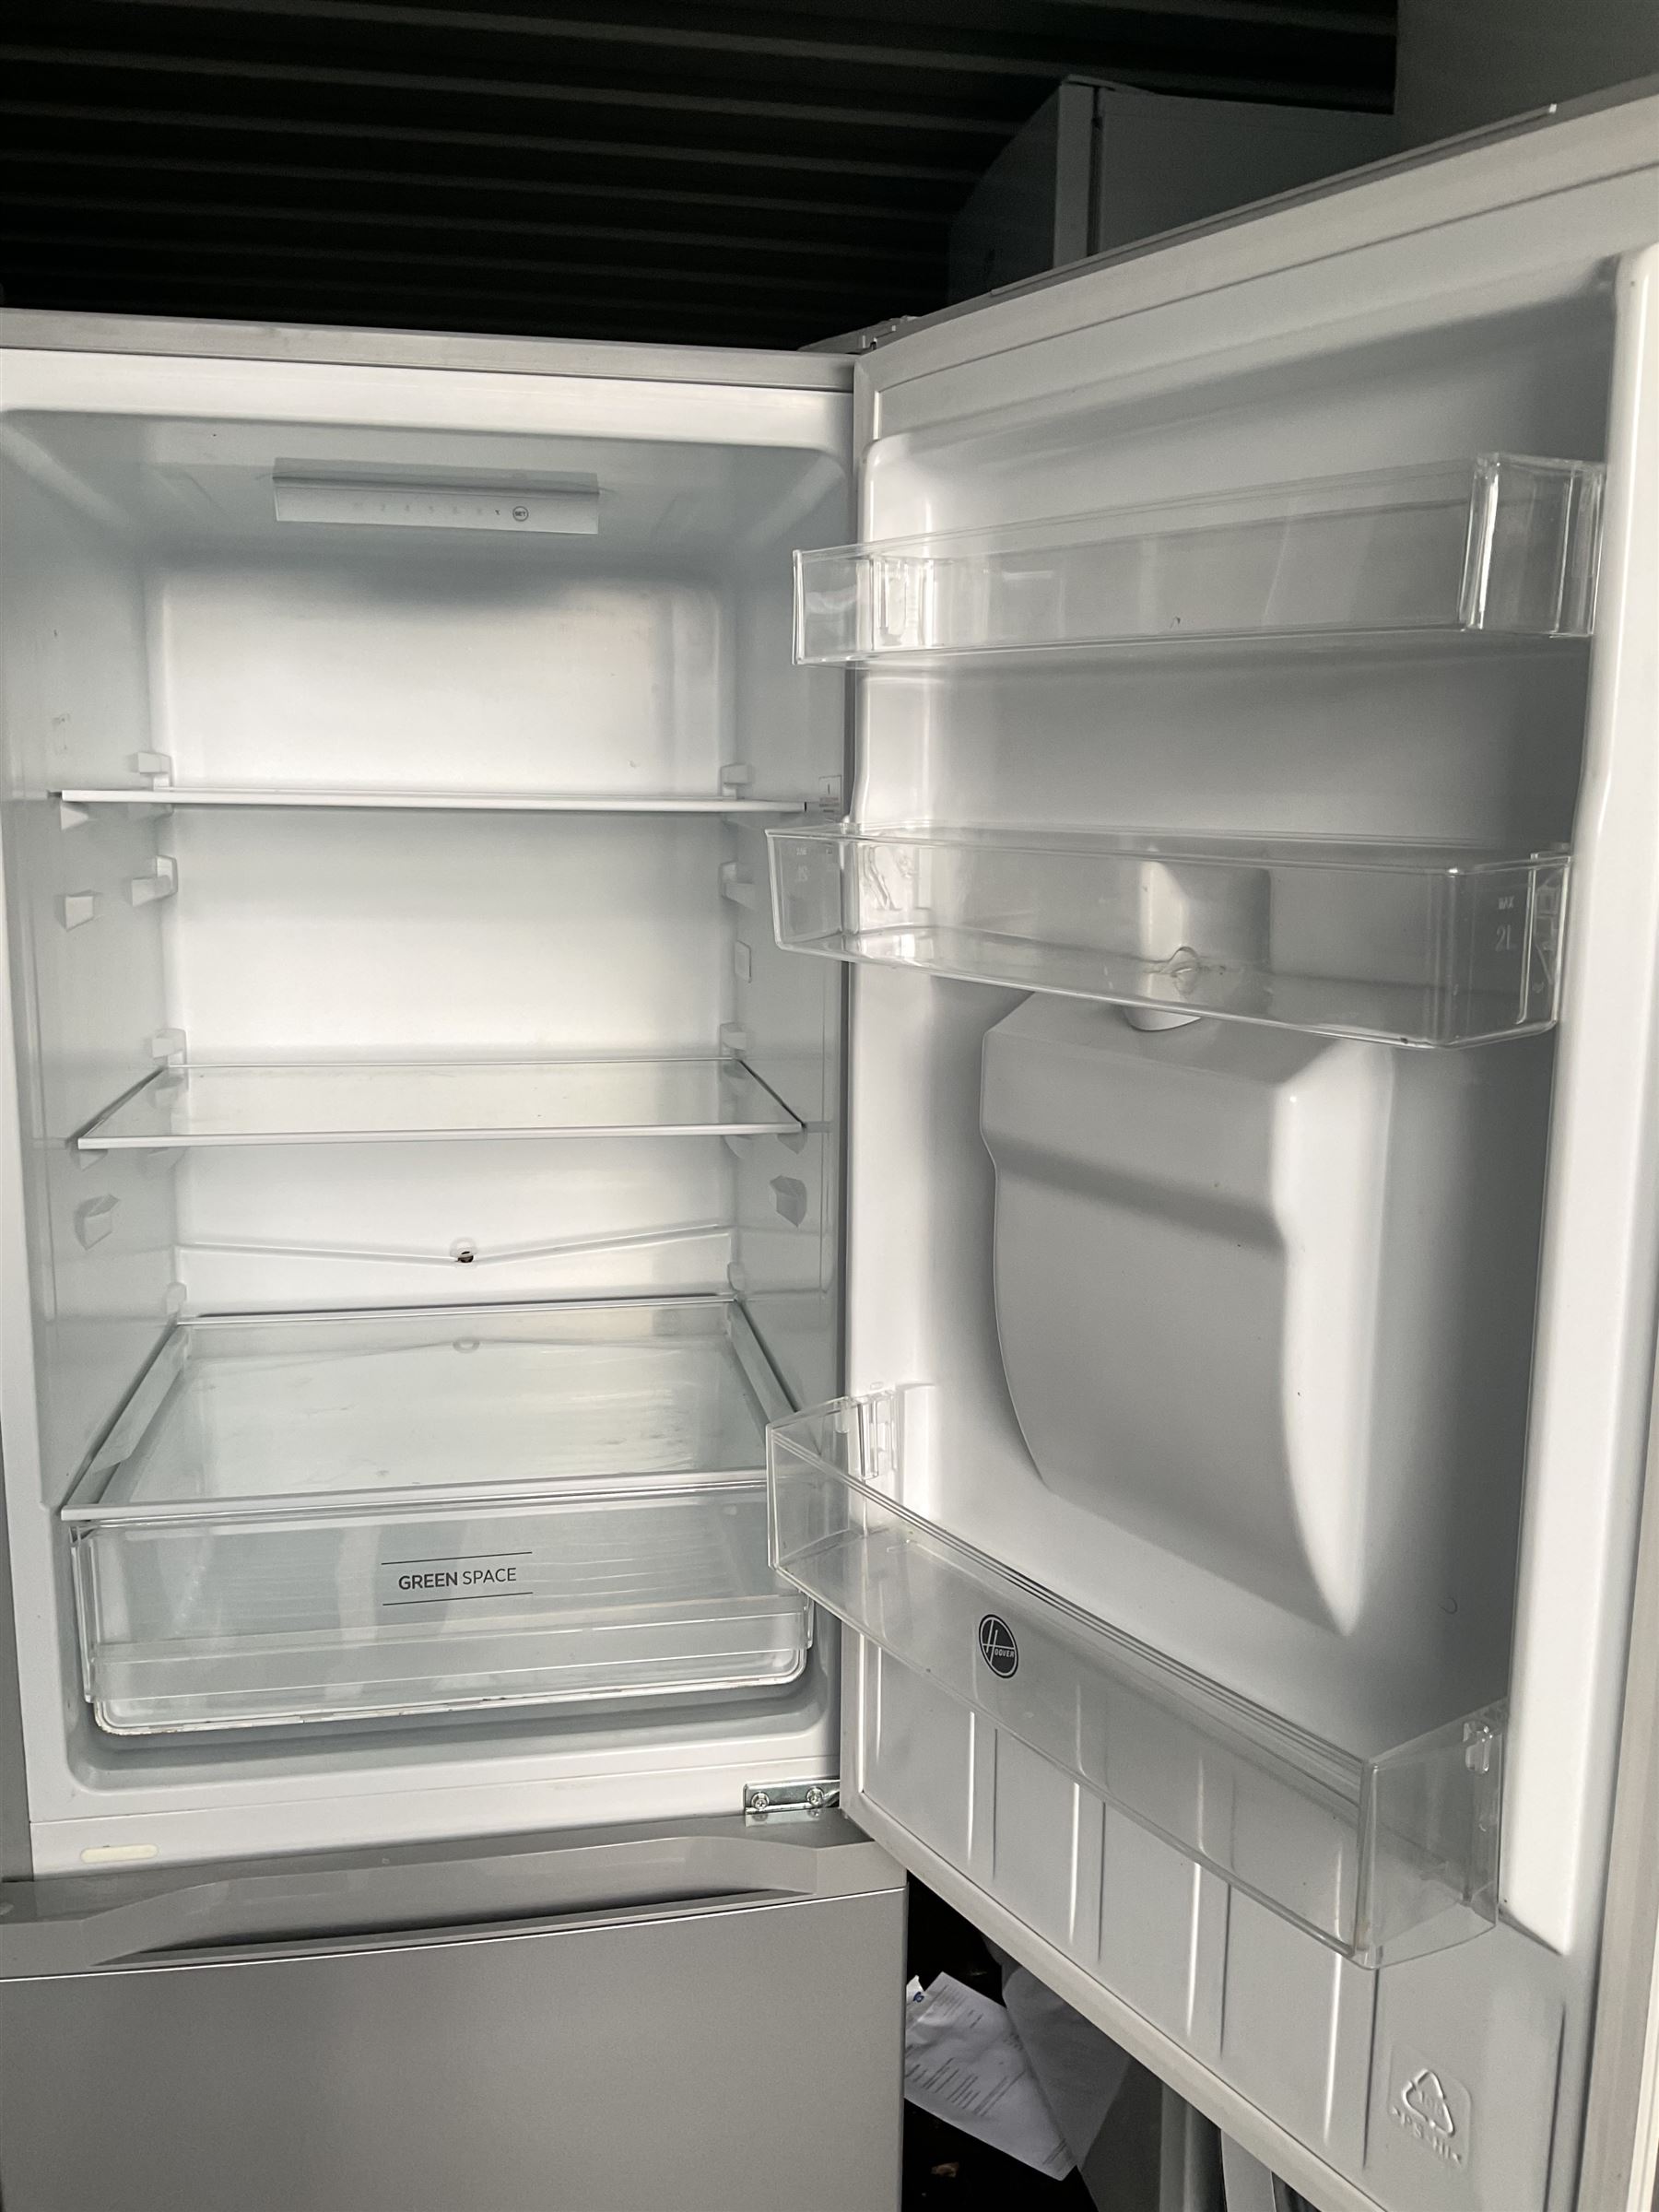 Hoover fridge freezer with water dispenser - Image 2 of 3